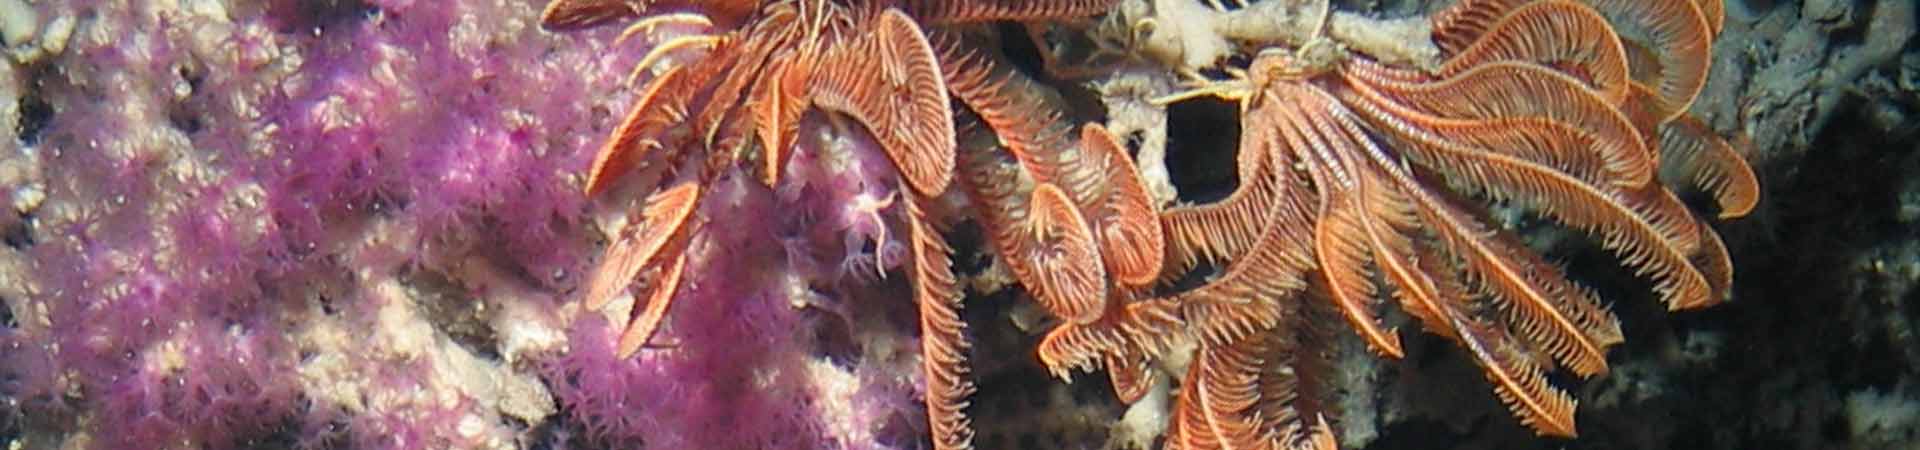 Photo showing benthic biodiversity in deep waters